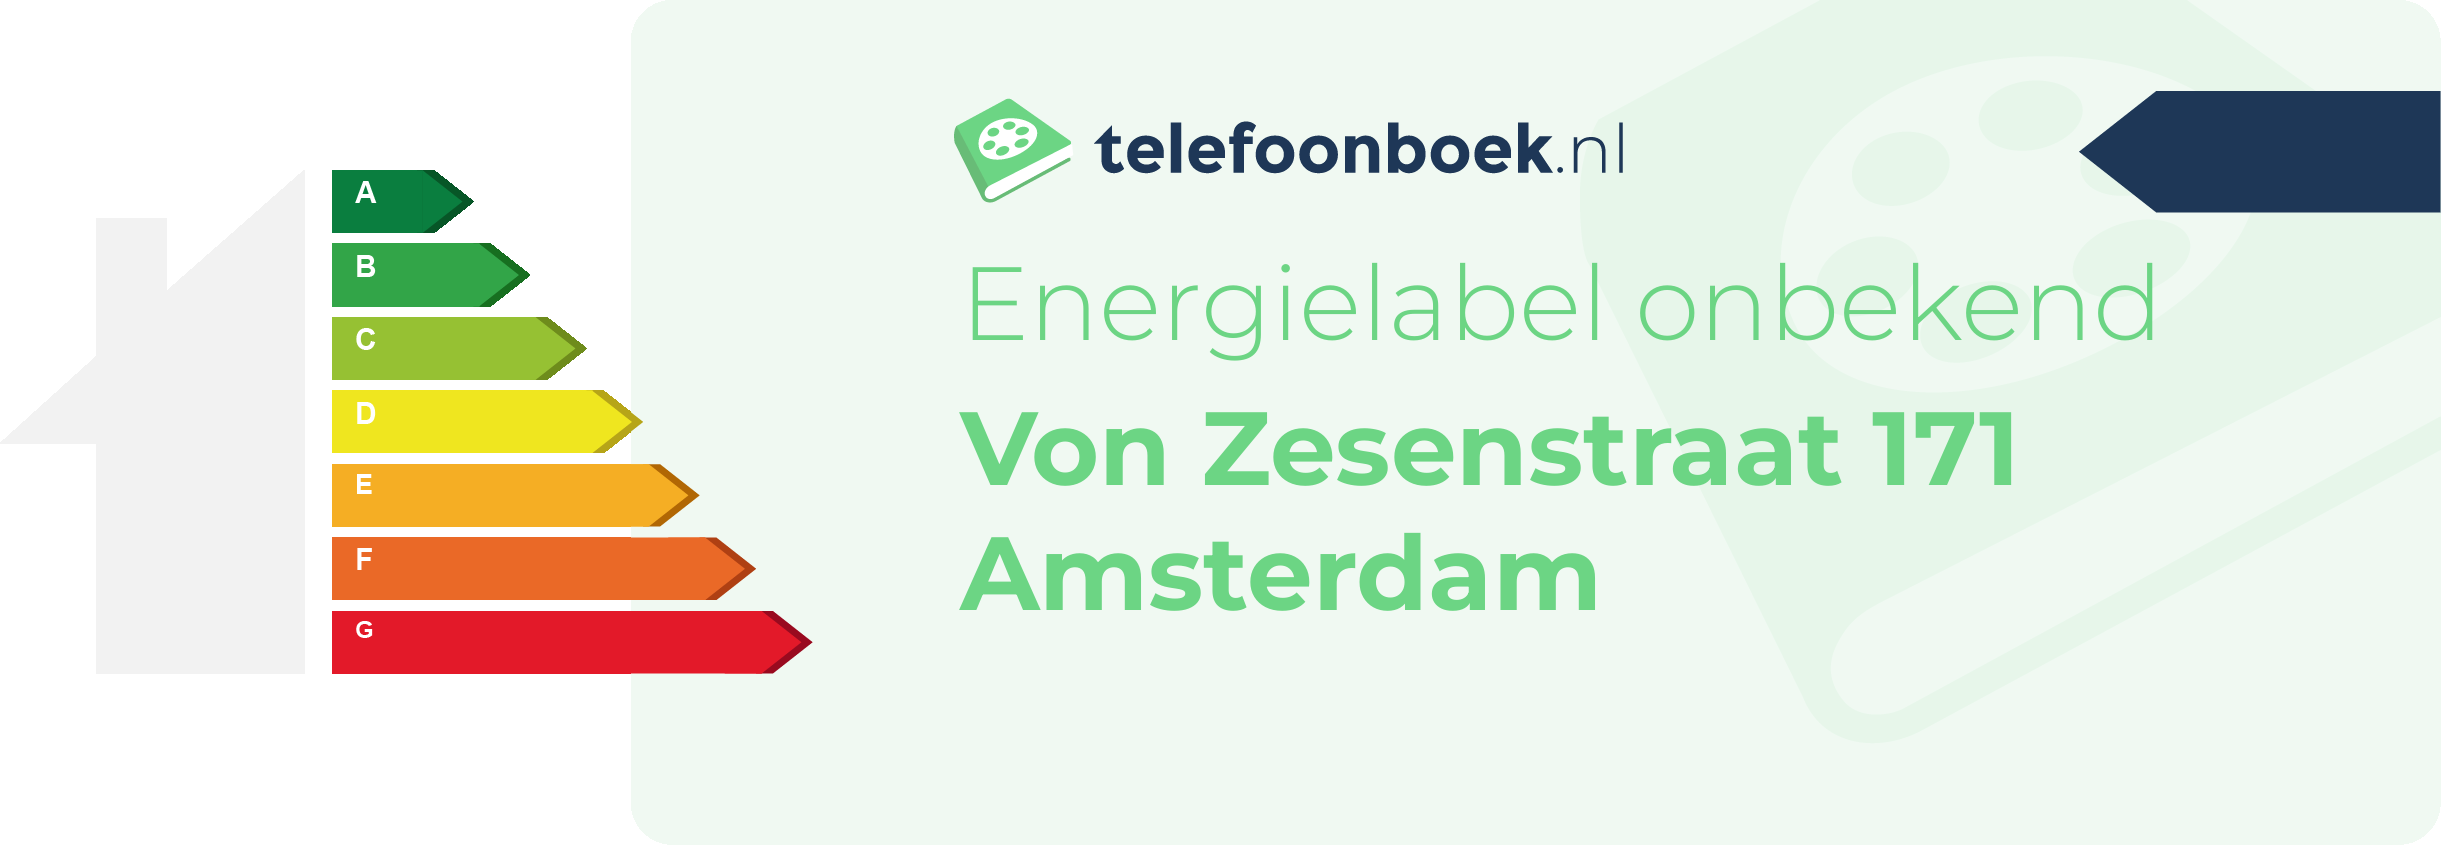 Energielabel Von Zesenstraat 171 Amsterdam